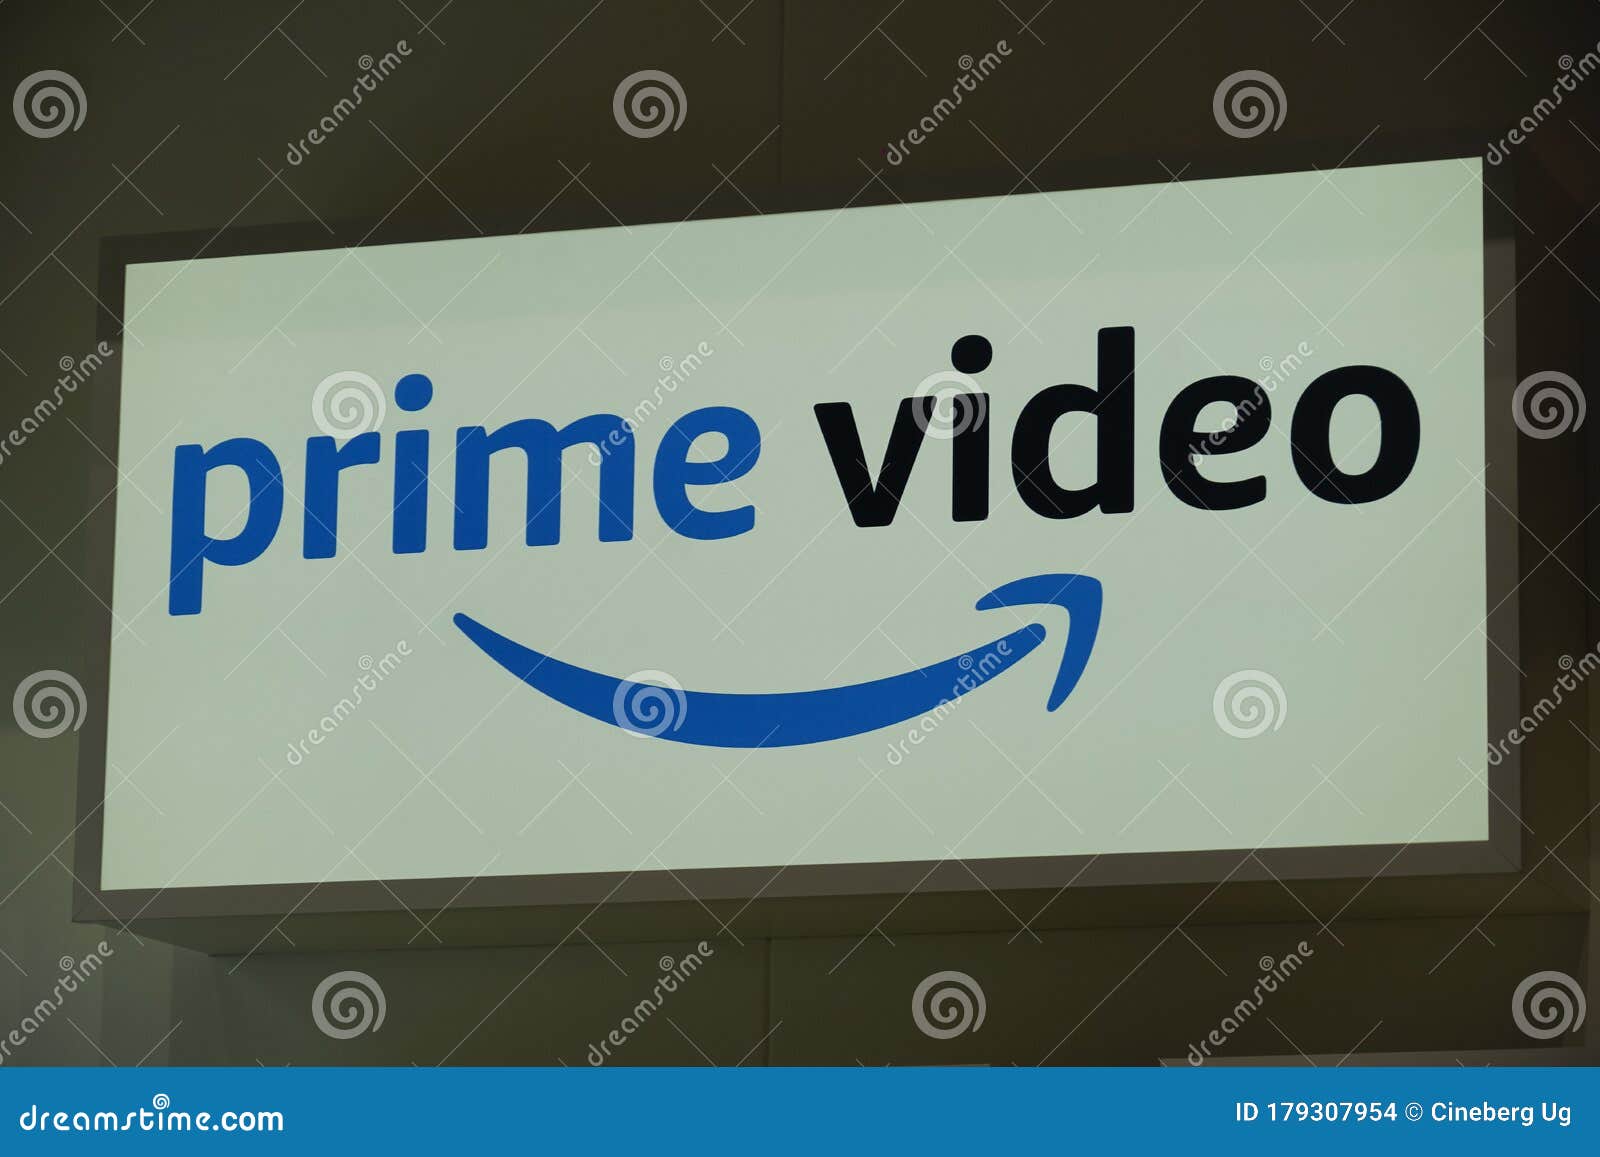 Amazon Prime Video emblem editorial stock image